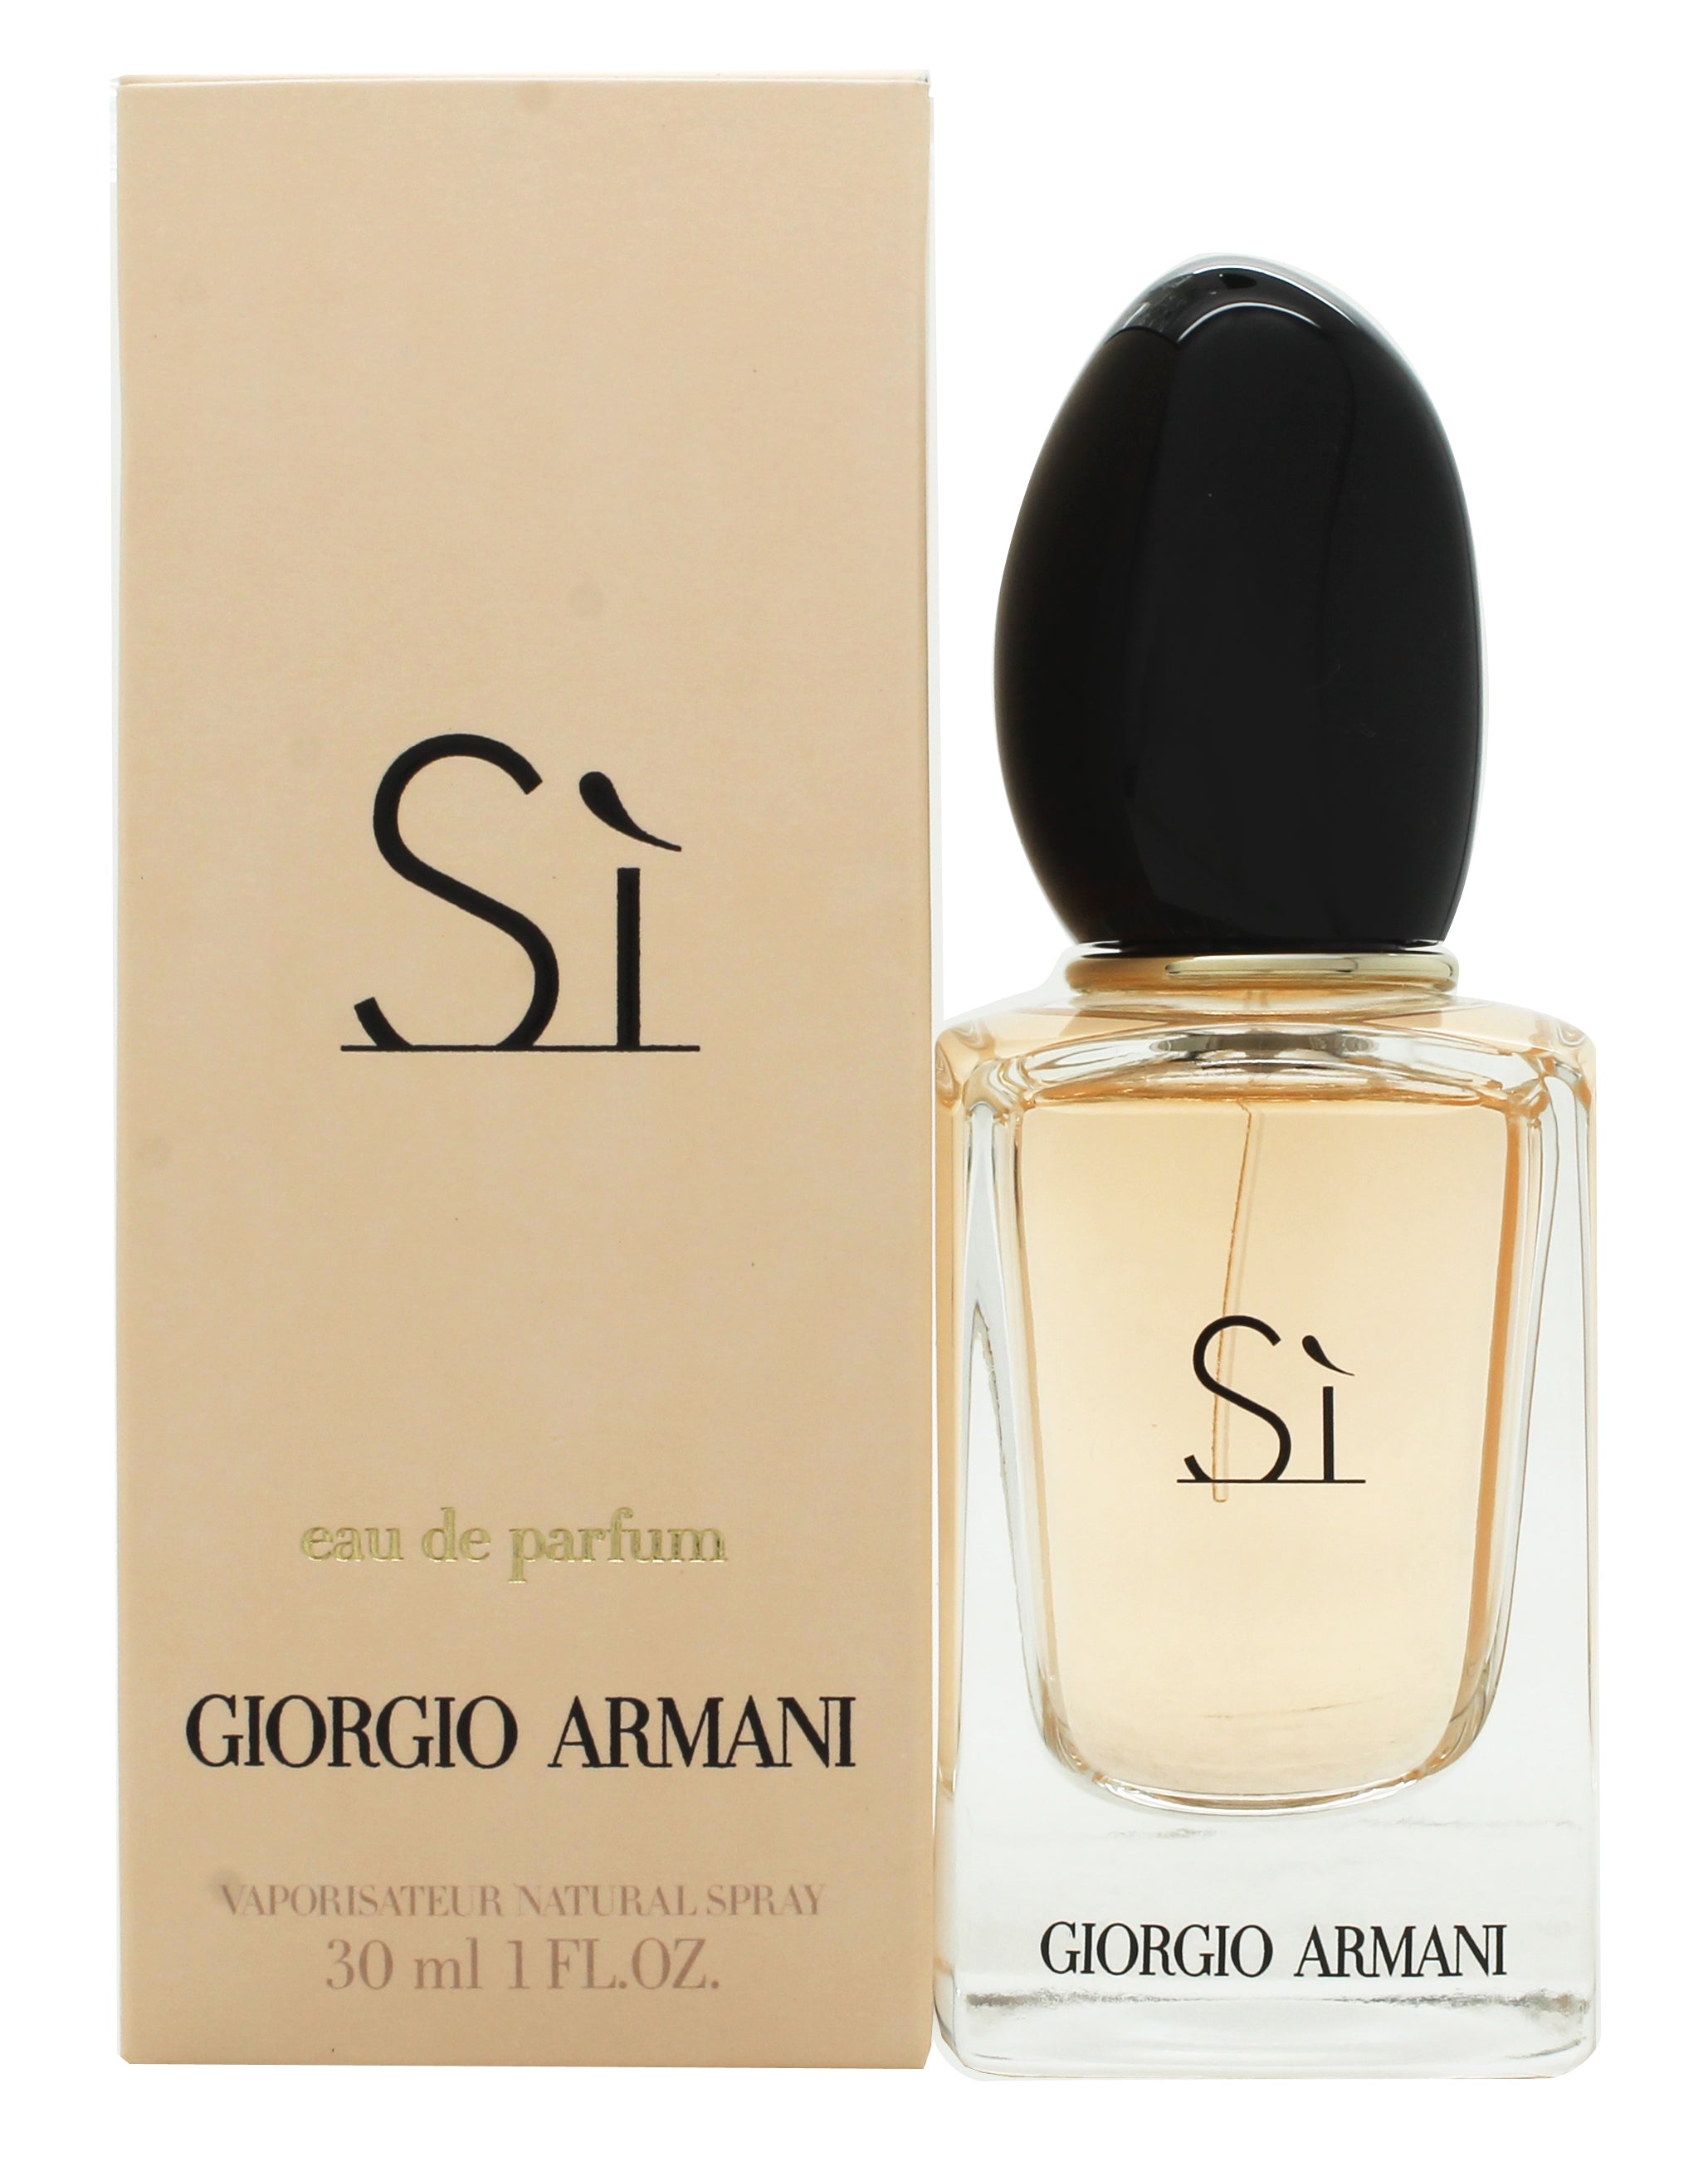 View Giorgio Armani Si Eau de Parfum 30ml Spray information